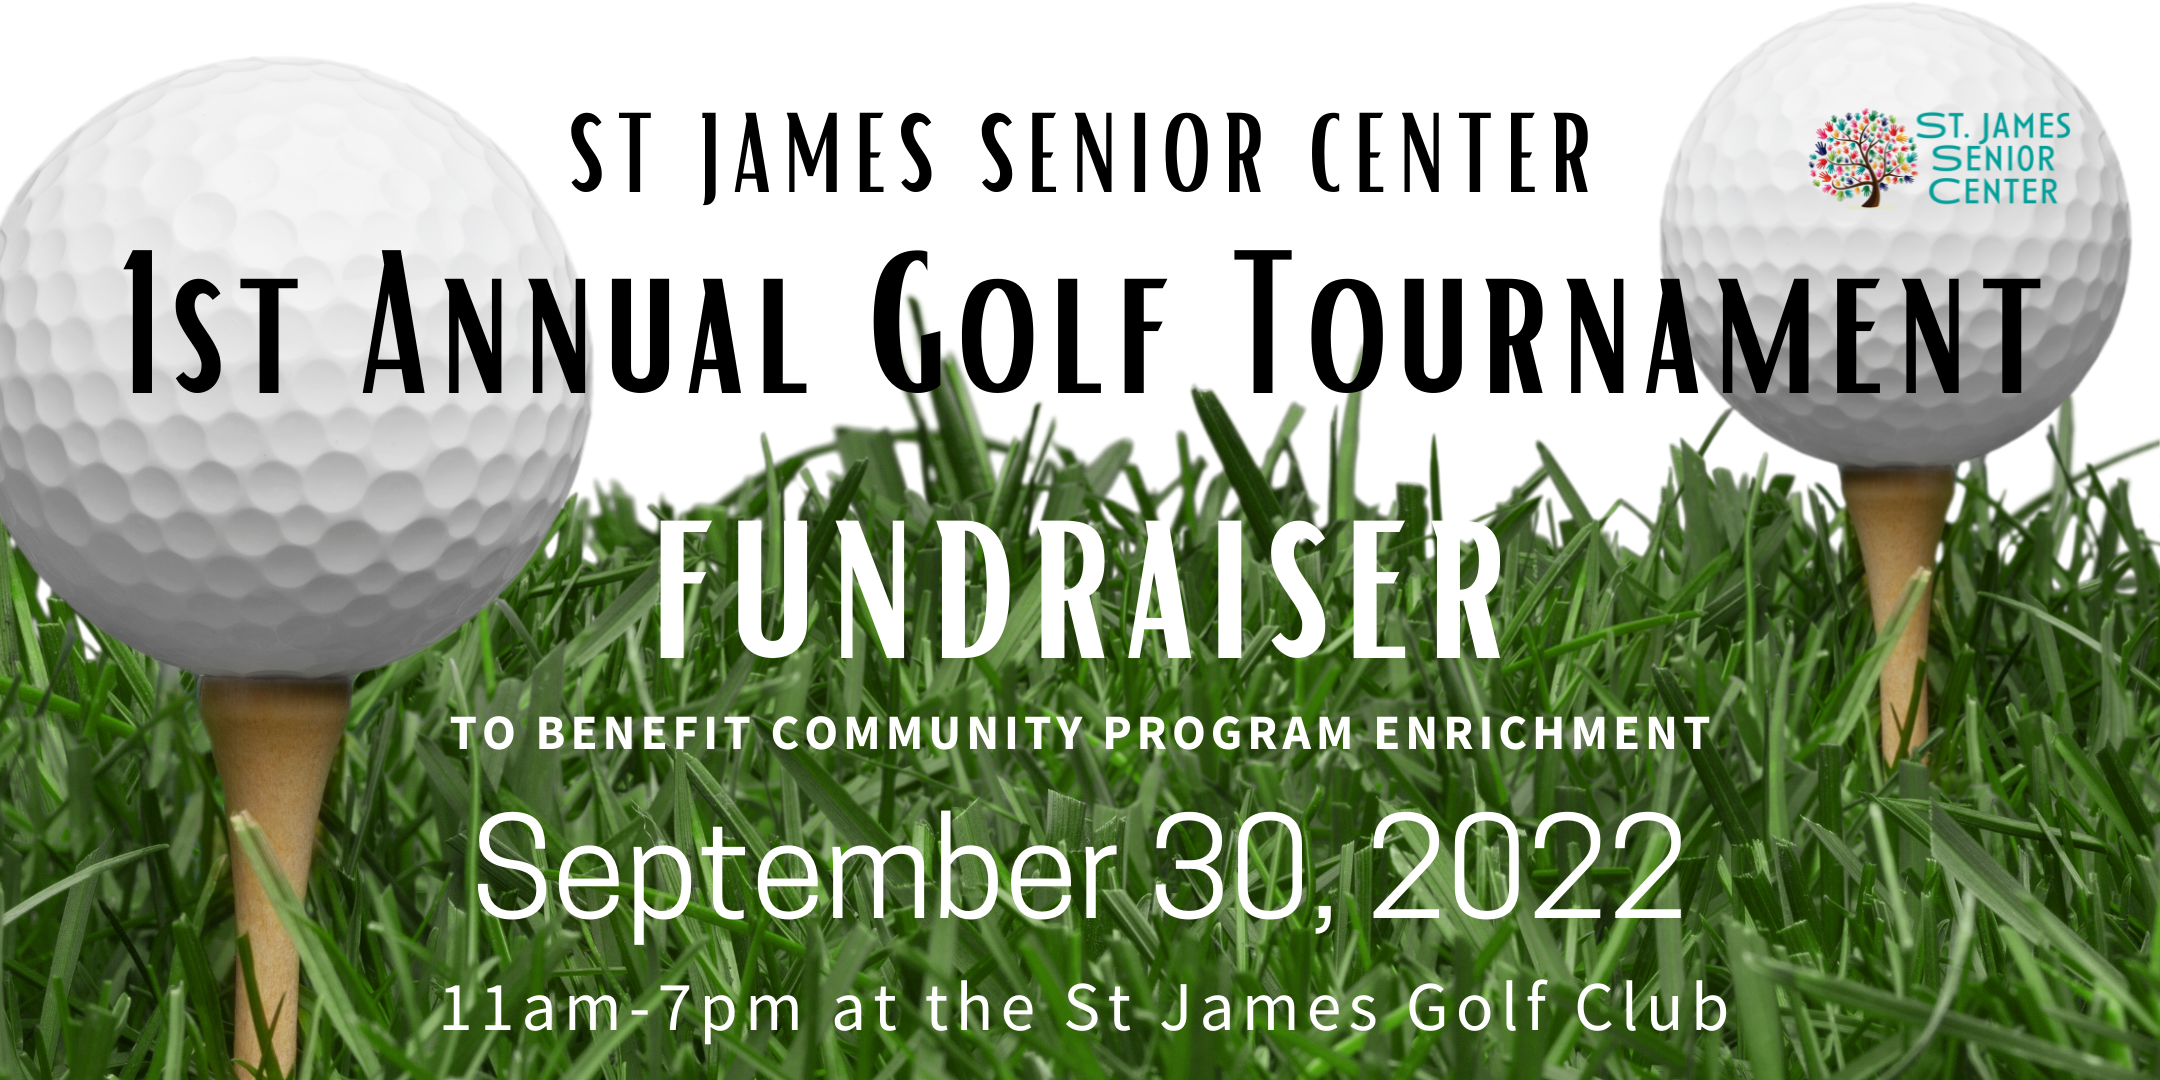 1st Annual Golf Tournament Fundraiser